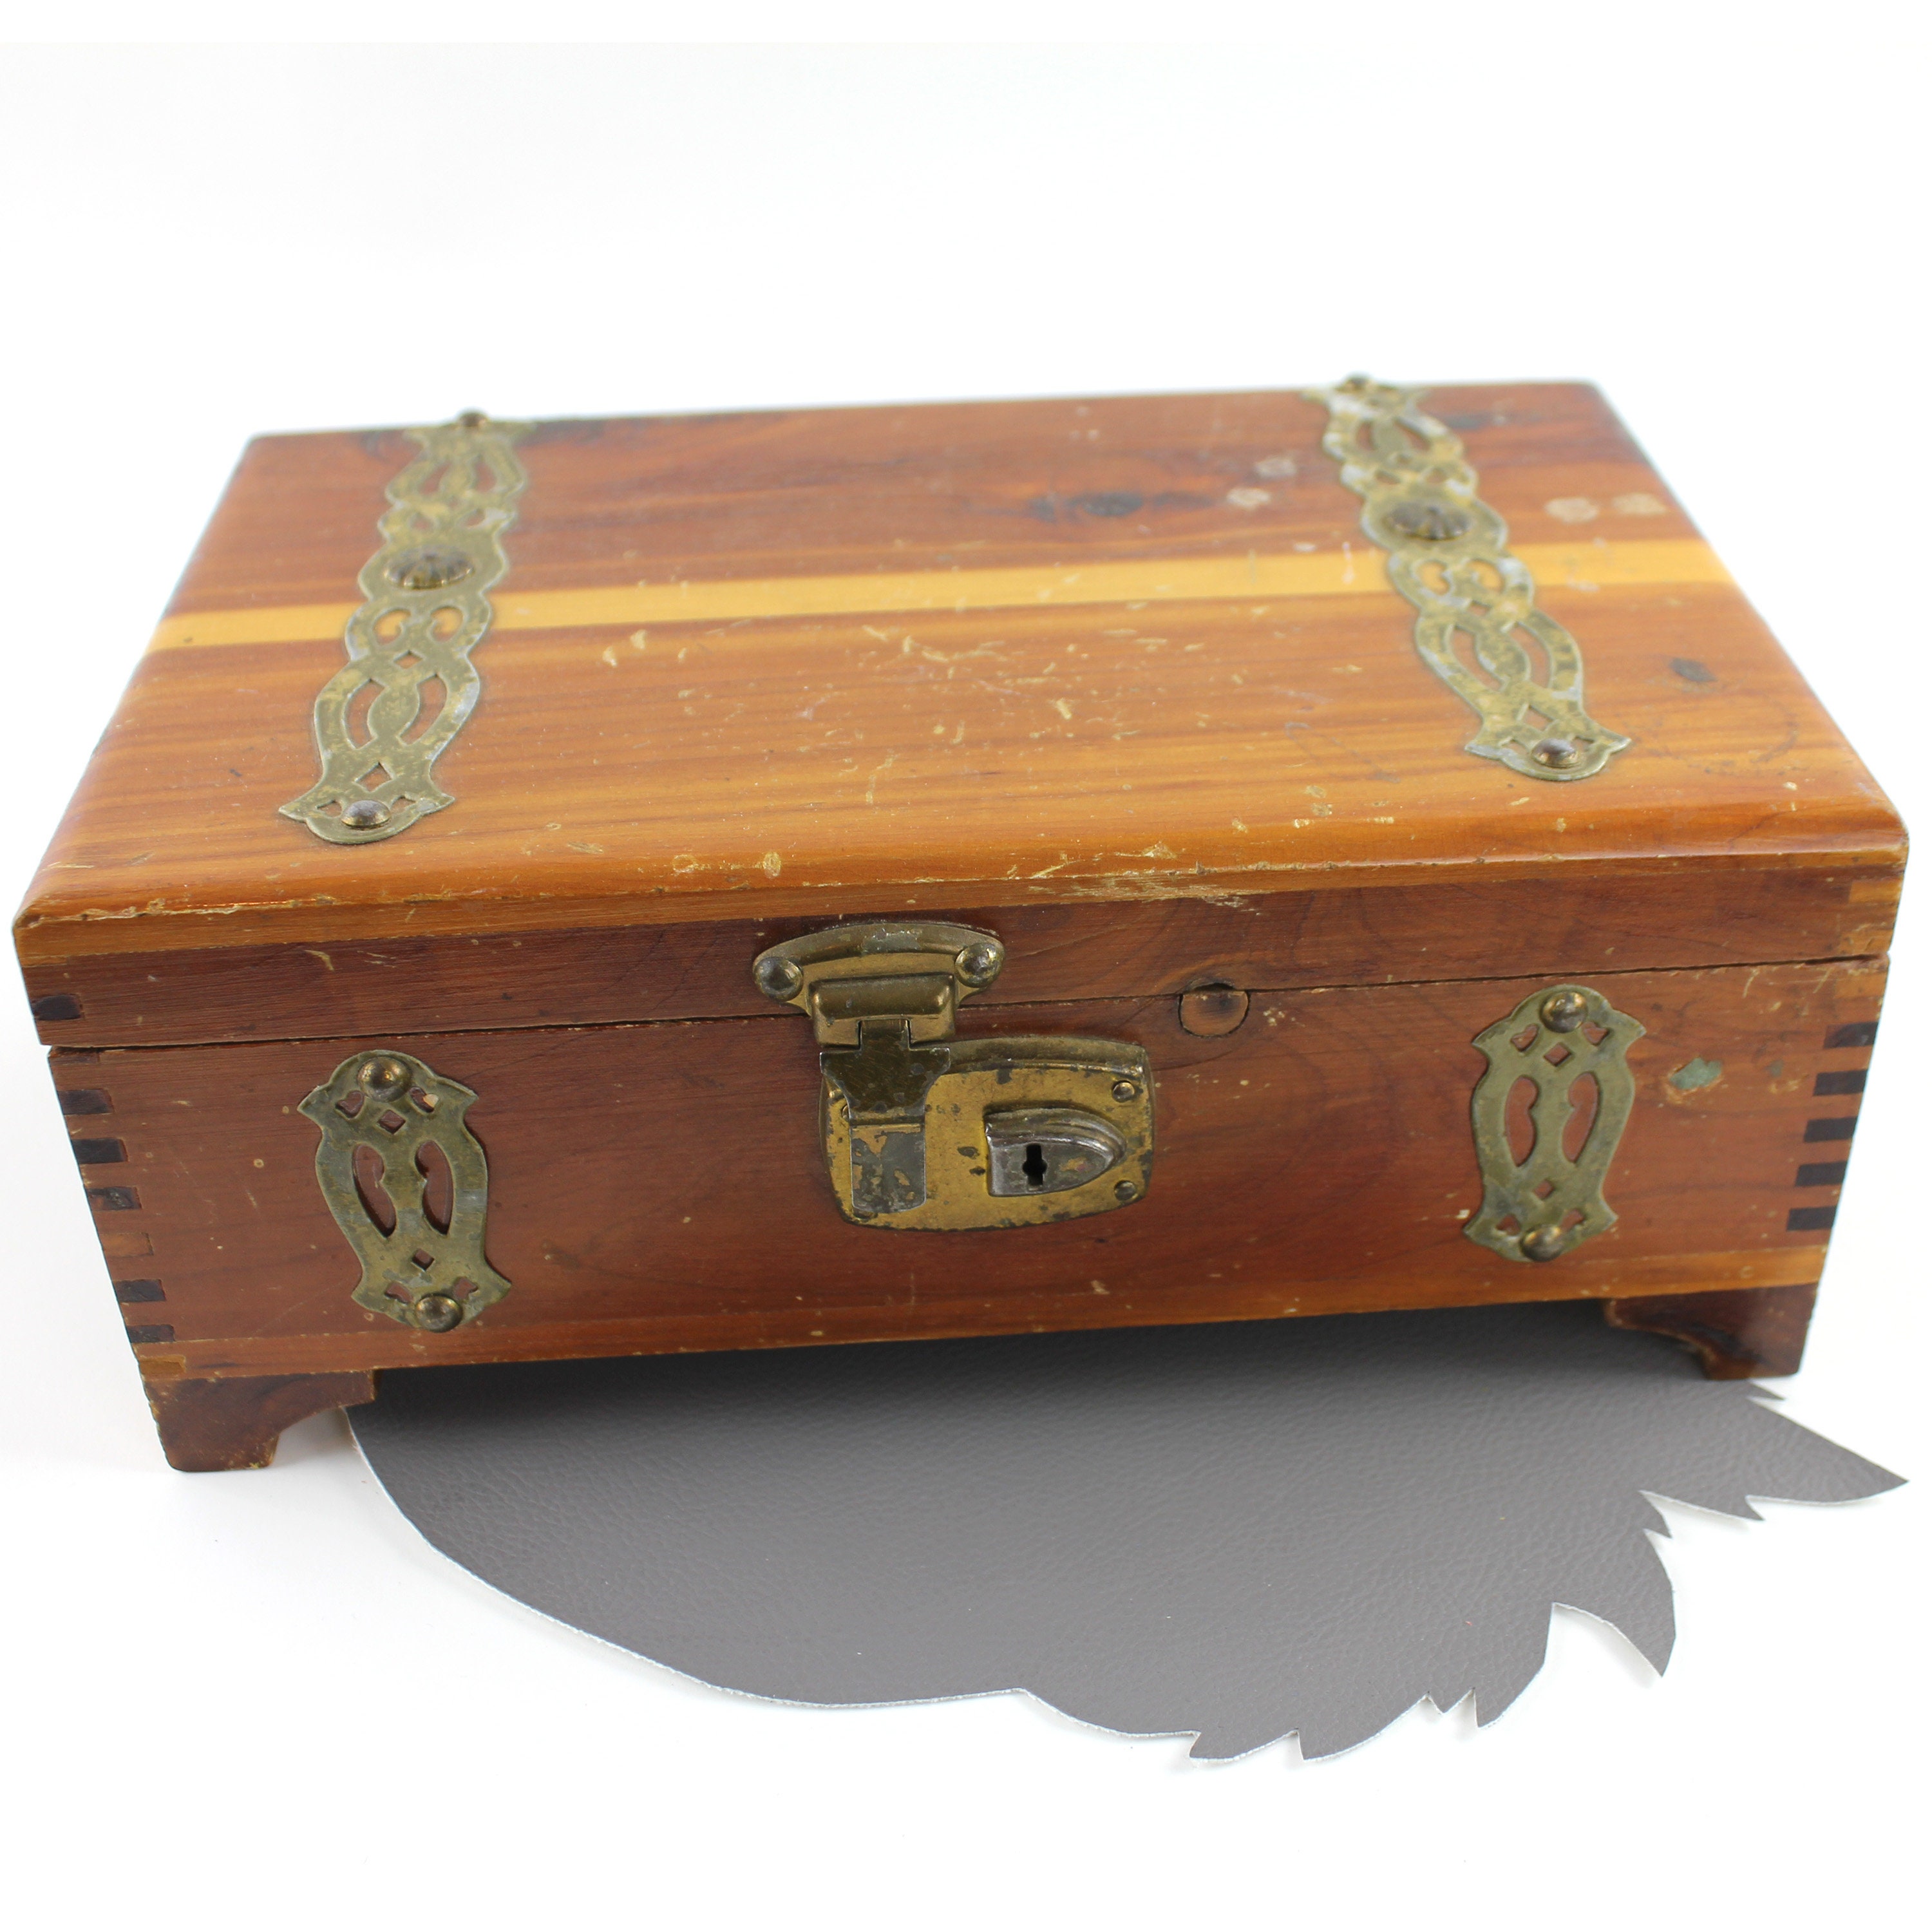 UMX LT-25 Metal Latch: Cigar Box, Jewelry Box, Wood Boxes Hardware Accessory